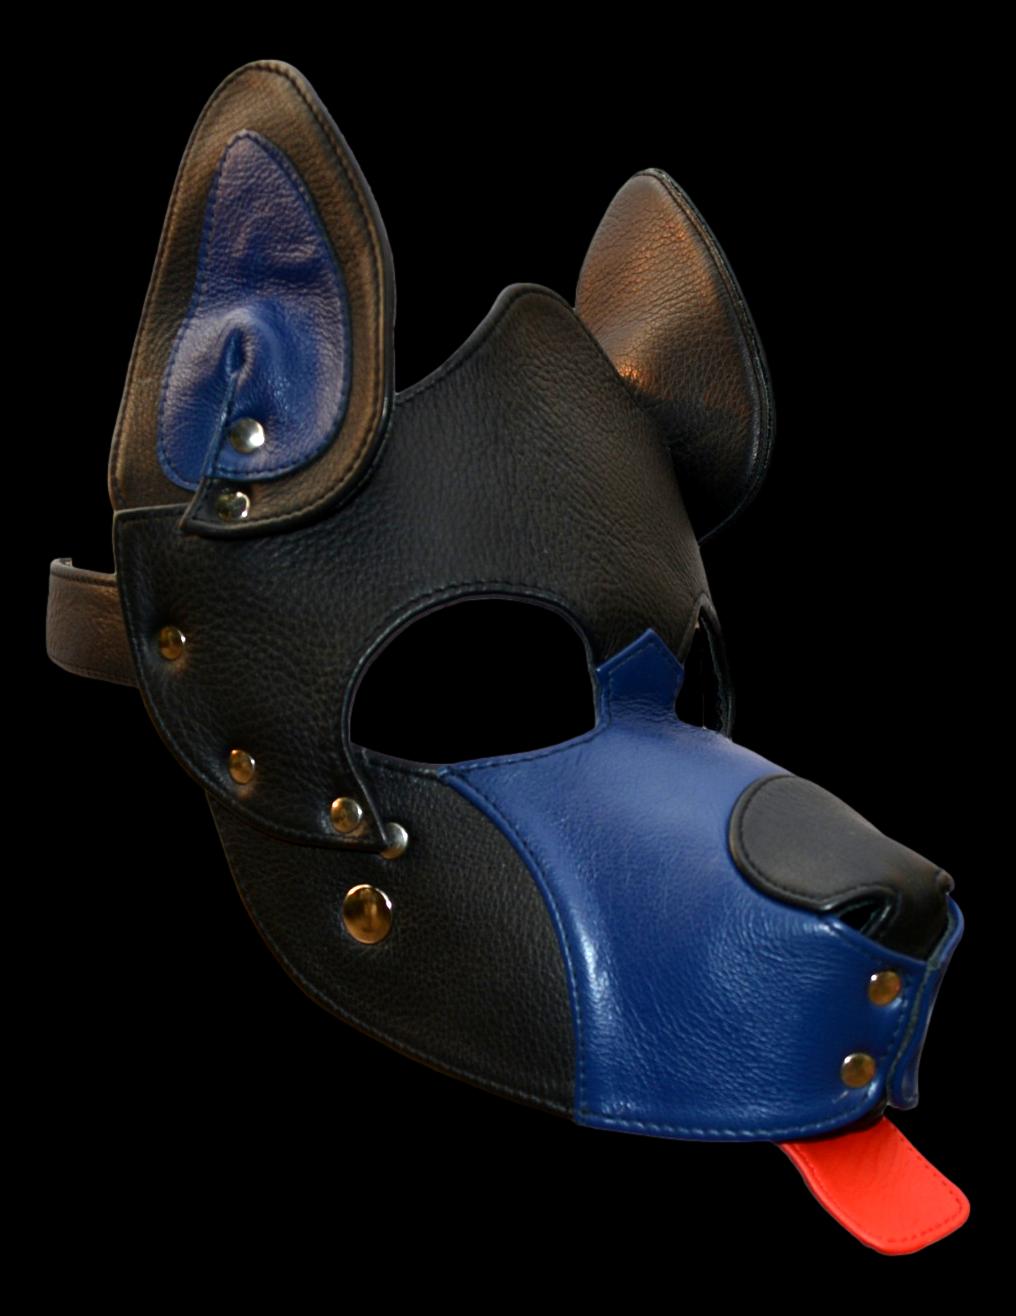 Leather Puppy Hood - MRI Leathers